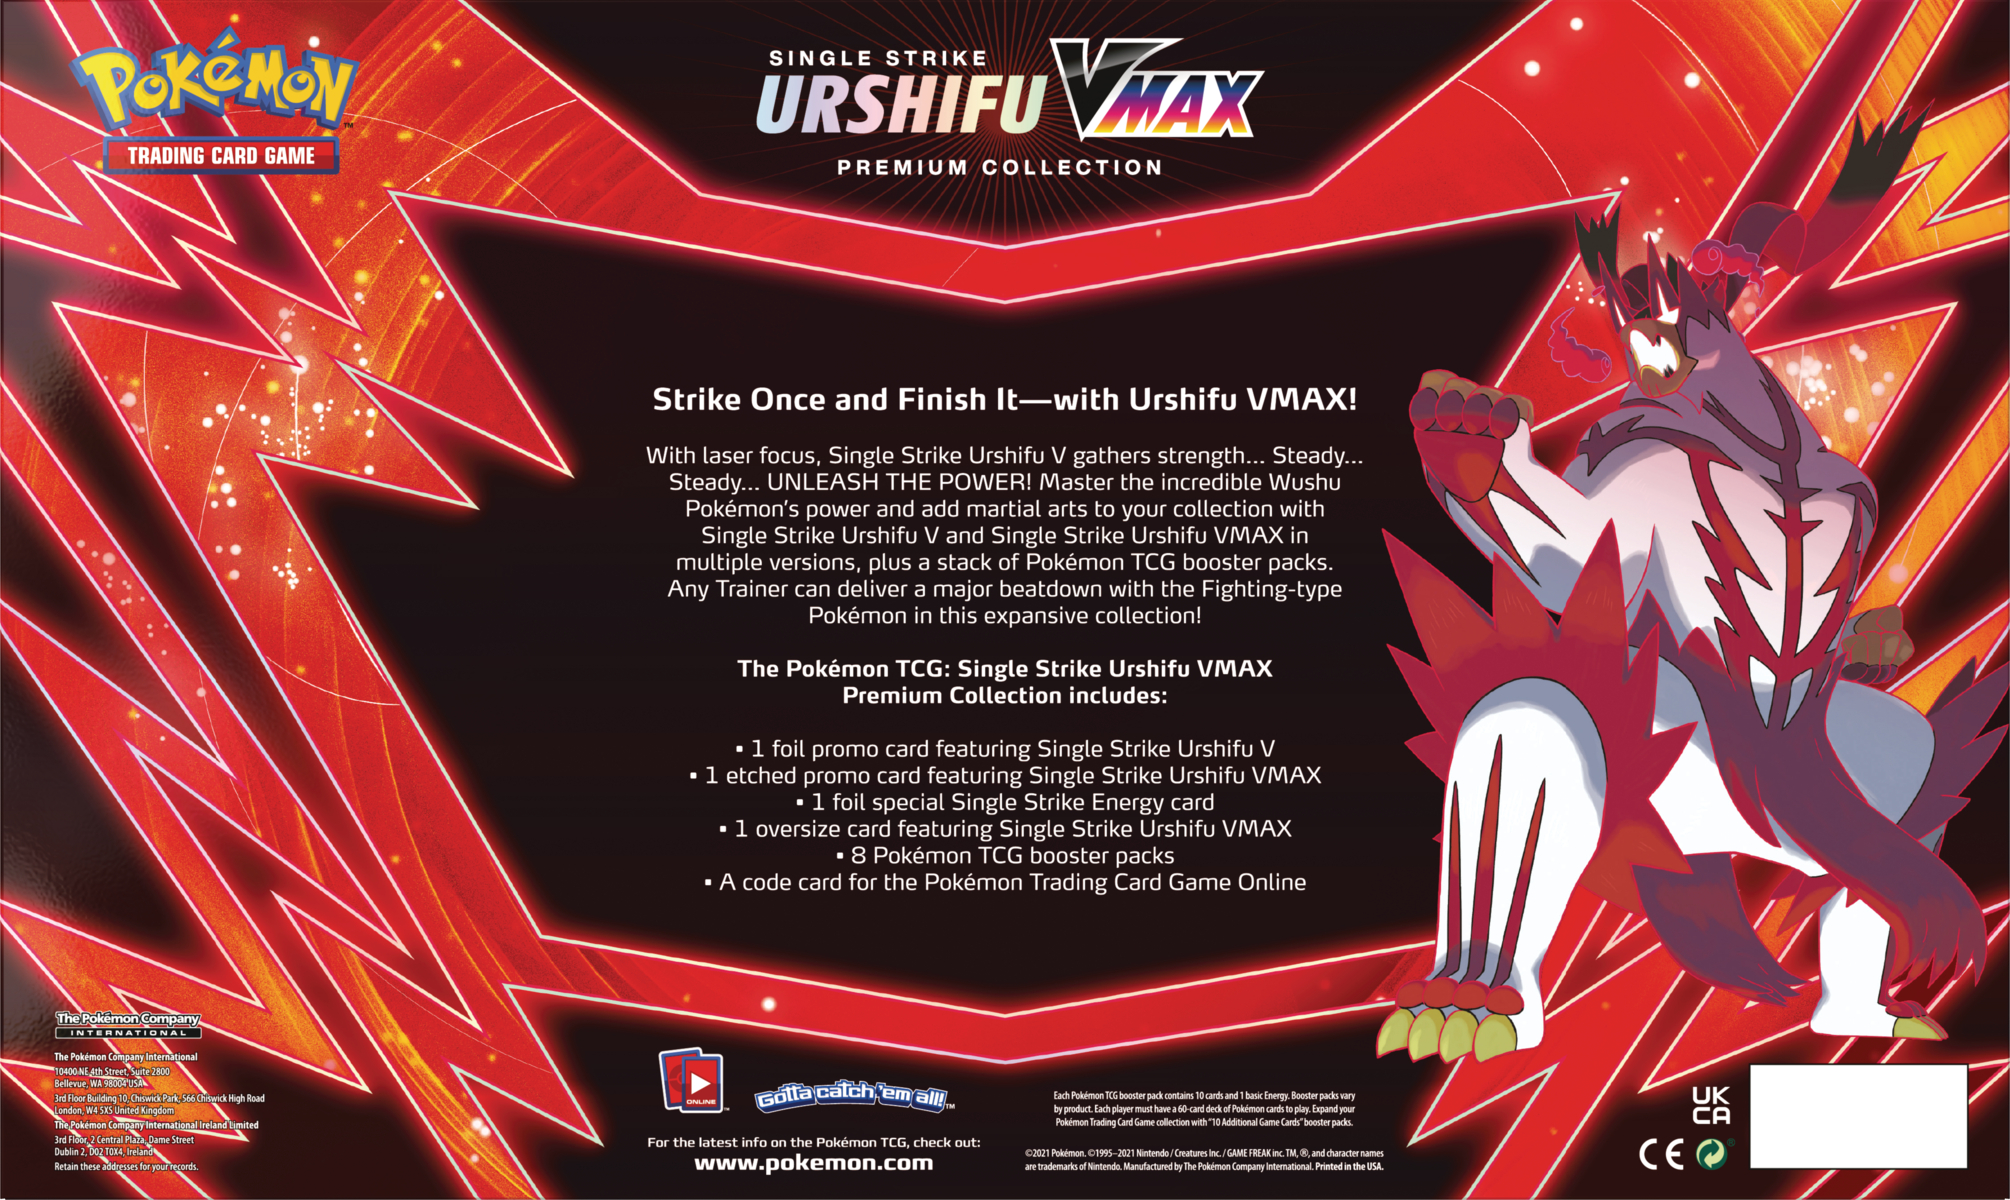 039 Single Rapid Strike Urshifu Vmax Premium Collections 039 Revealed Pokebeach Com Forums